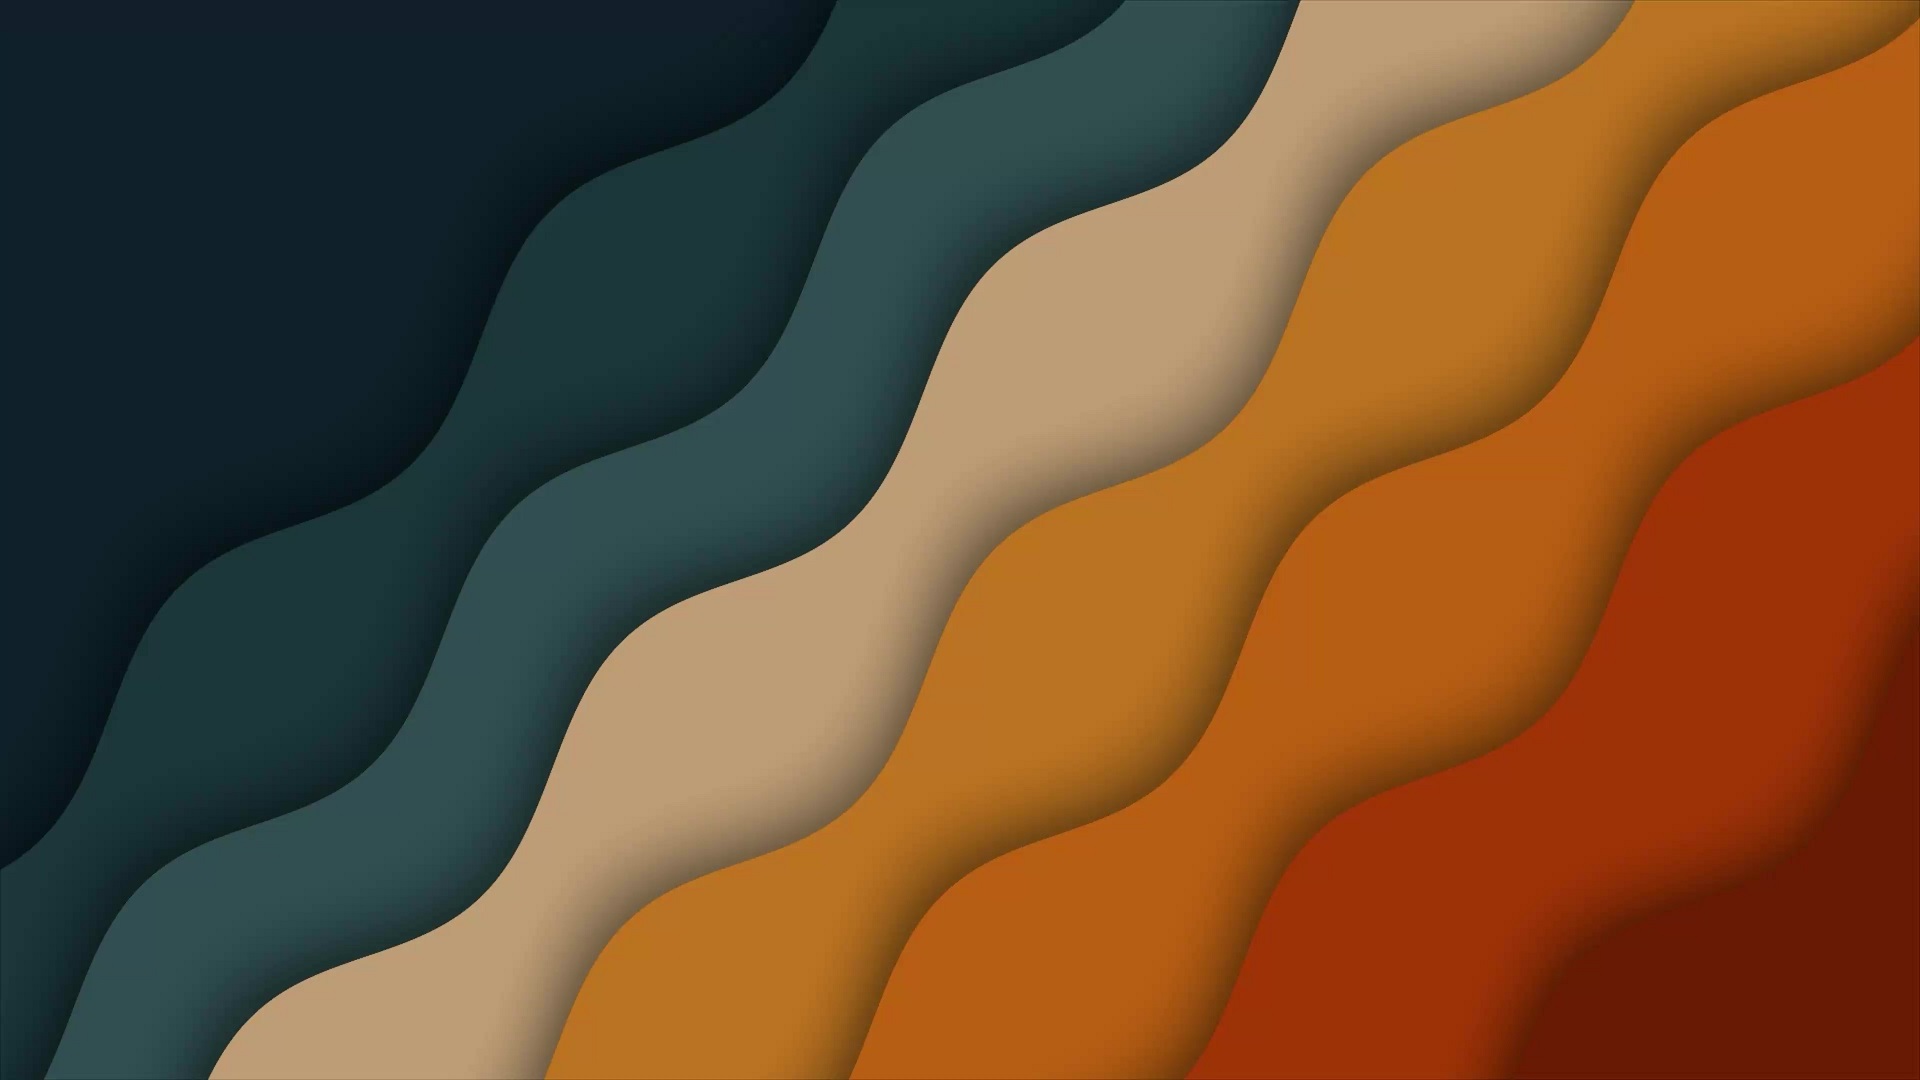 Abstract Angled Waves Live Wallpaper - MoeWalls